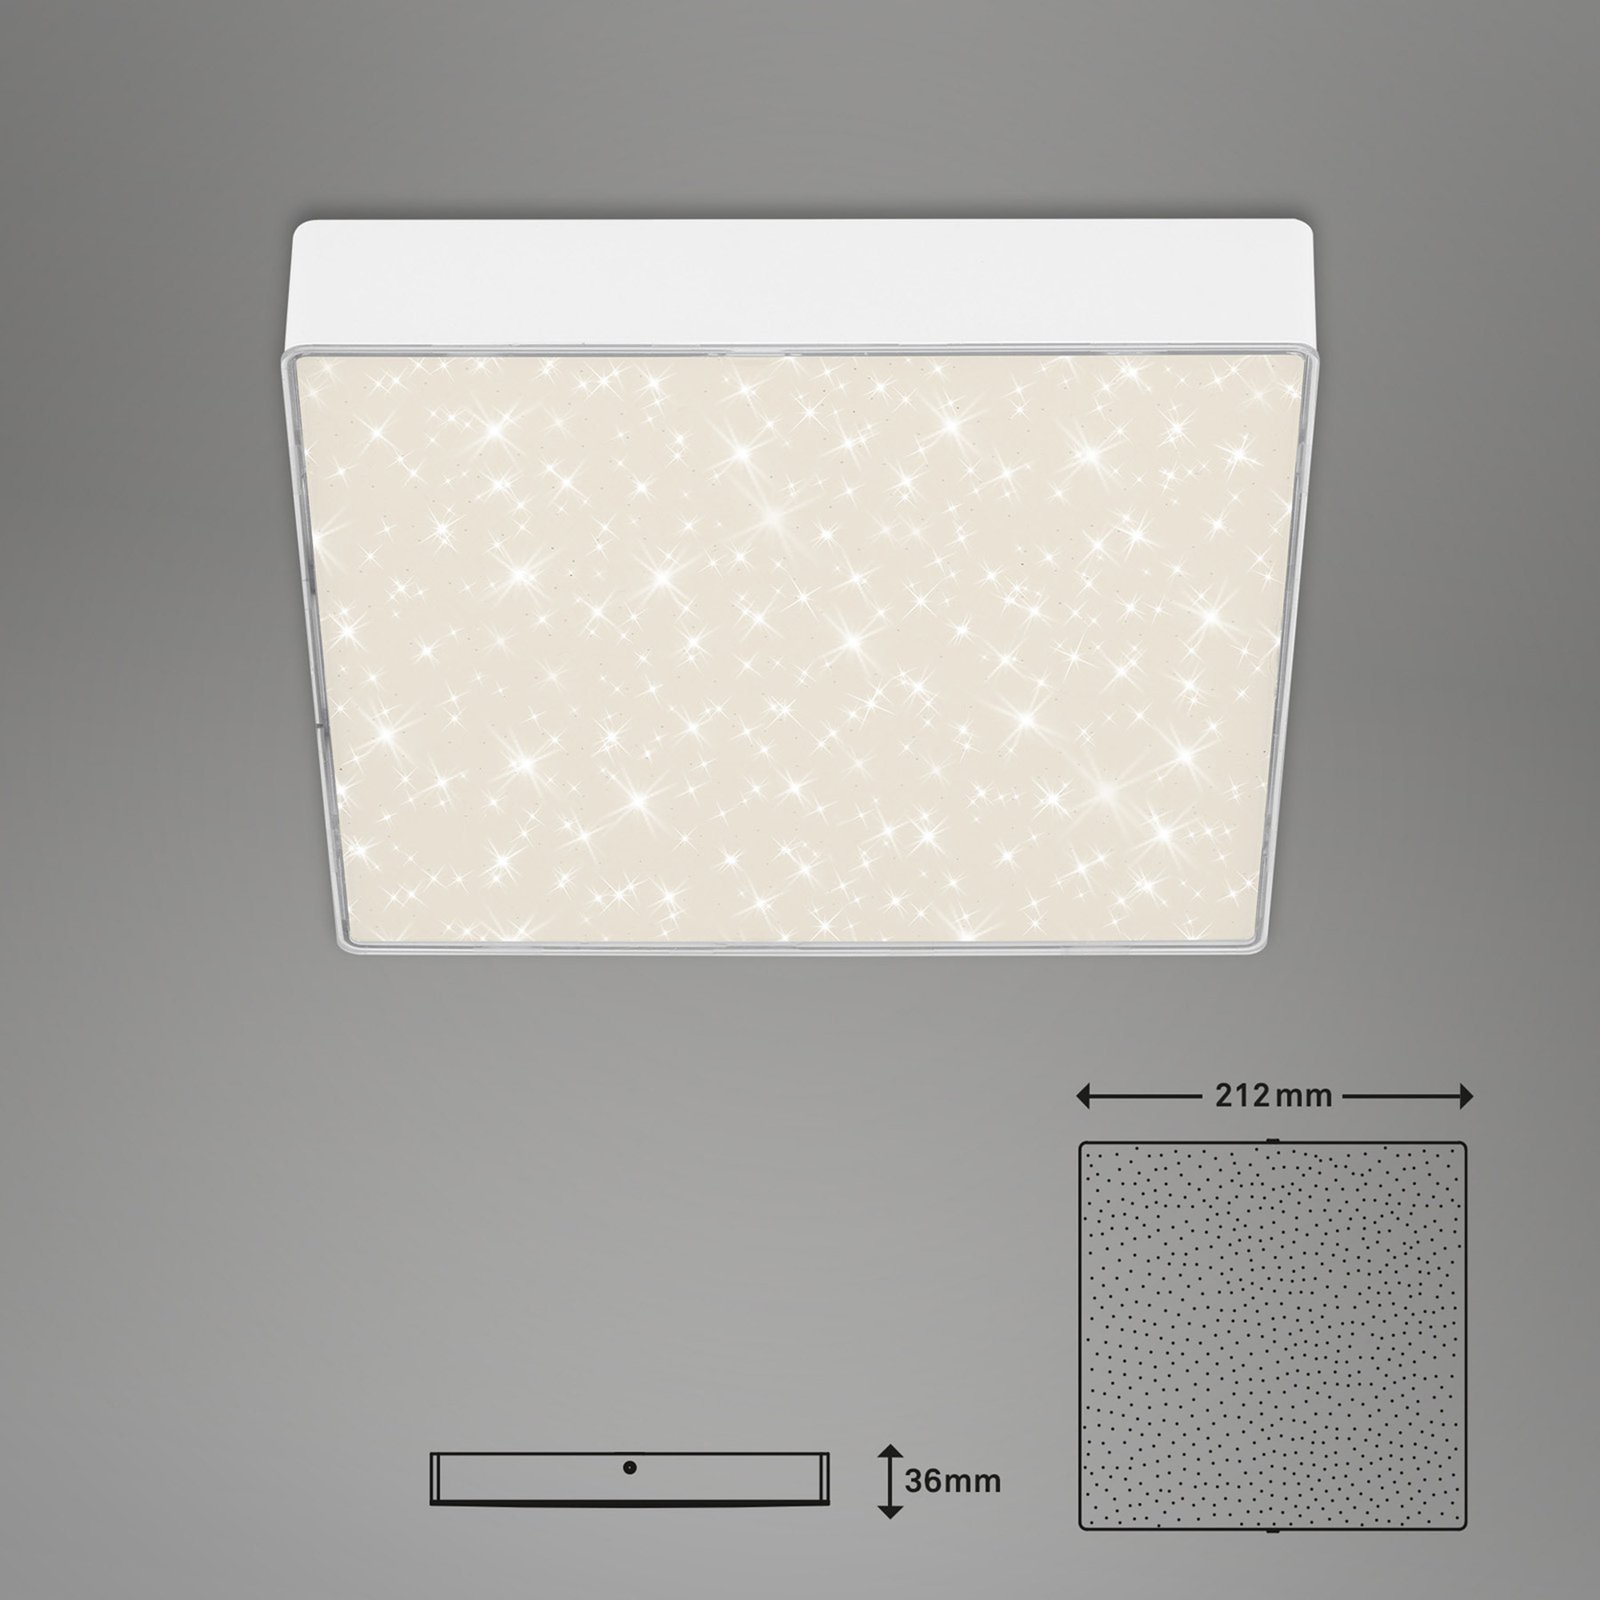 LED plafondlamp Flame Star, 21,2 x 21,2 cm wit